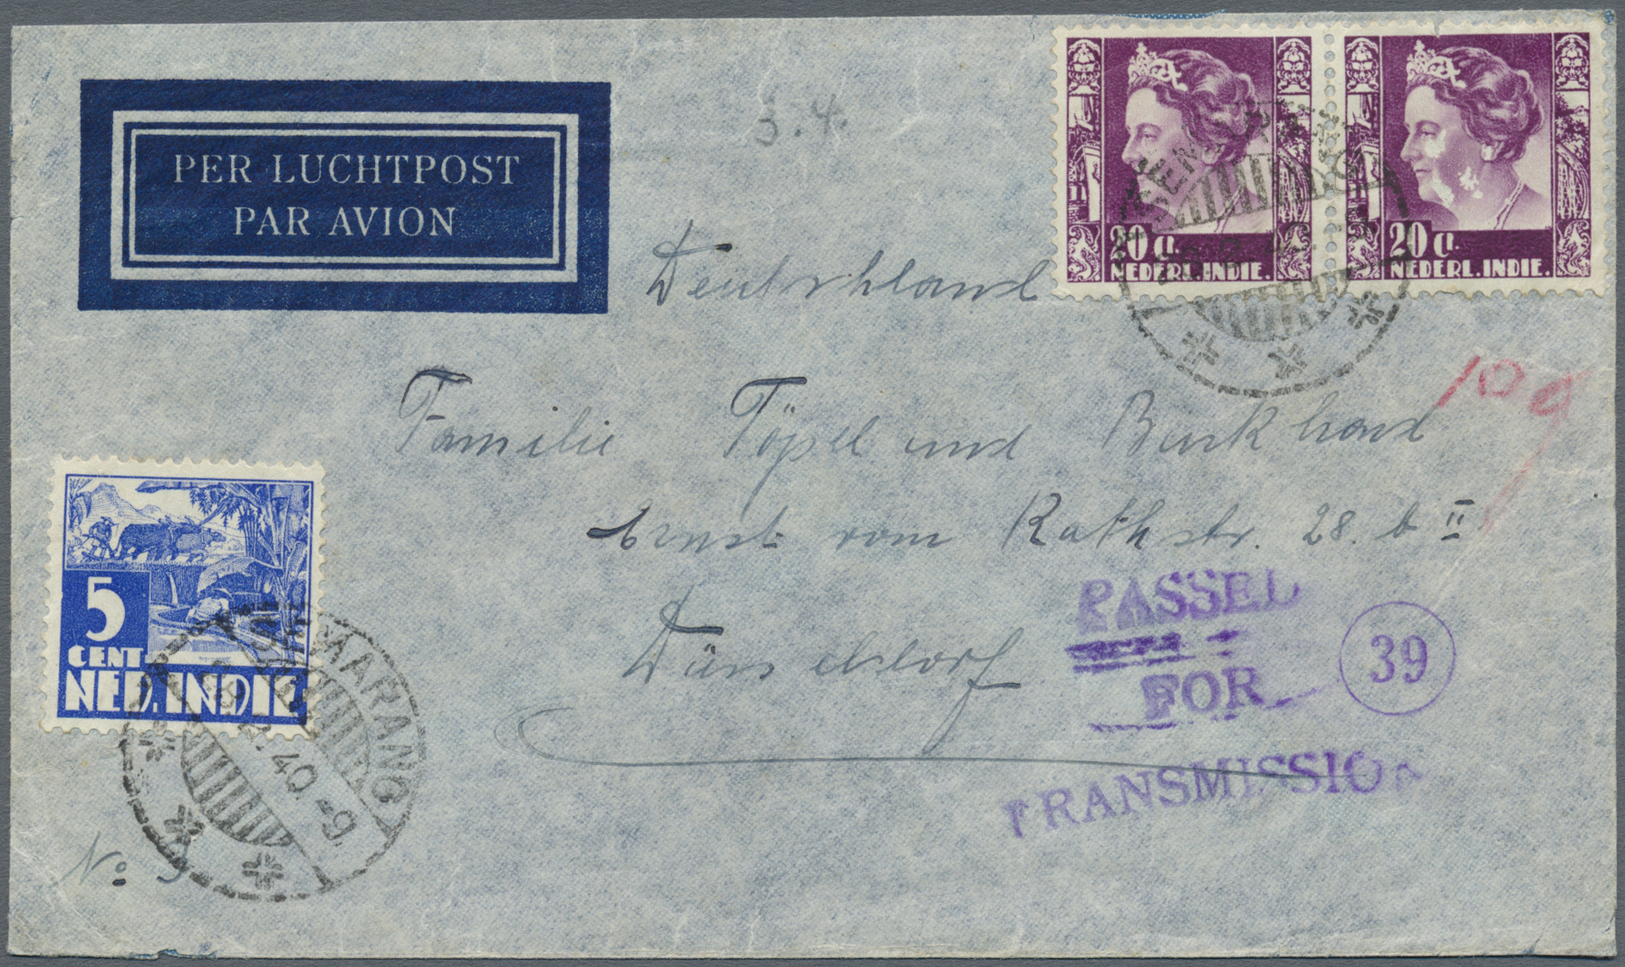 Br Niederländisch-Indien: 1940. Air Mail Envelope Addressed To Germany Bearing Netherlands Indies SG 341, 5c Ultramarine - Indes Néerlandaises